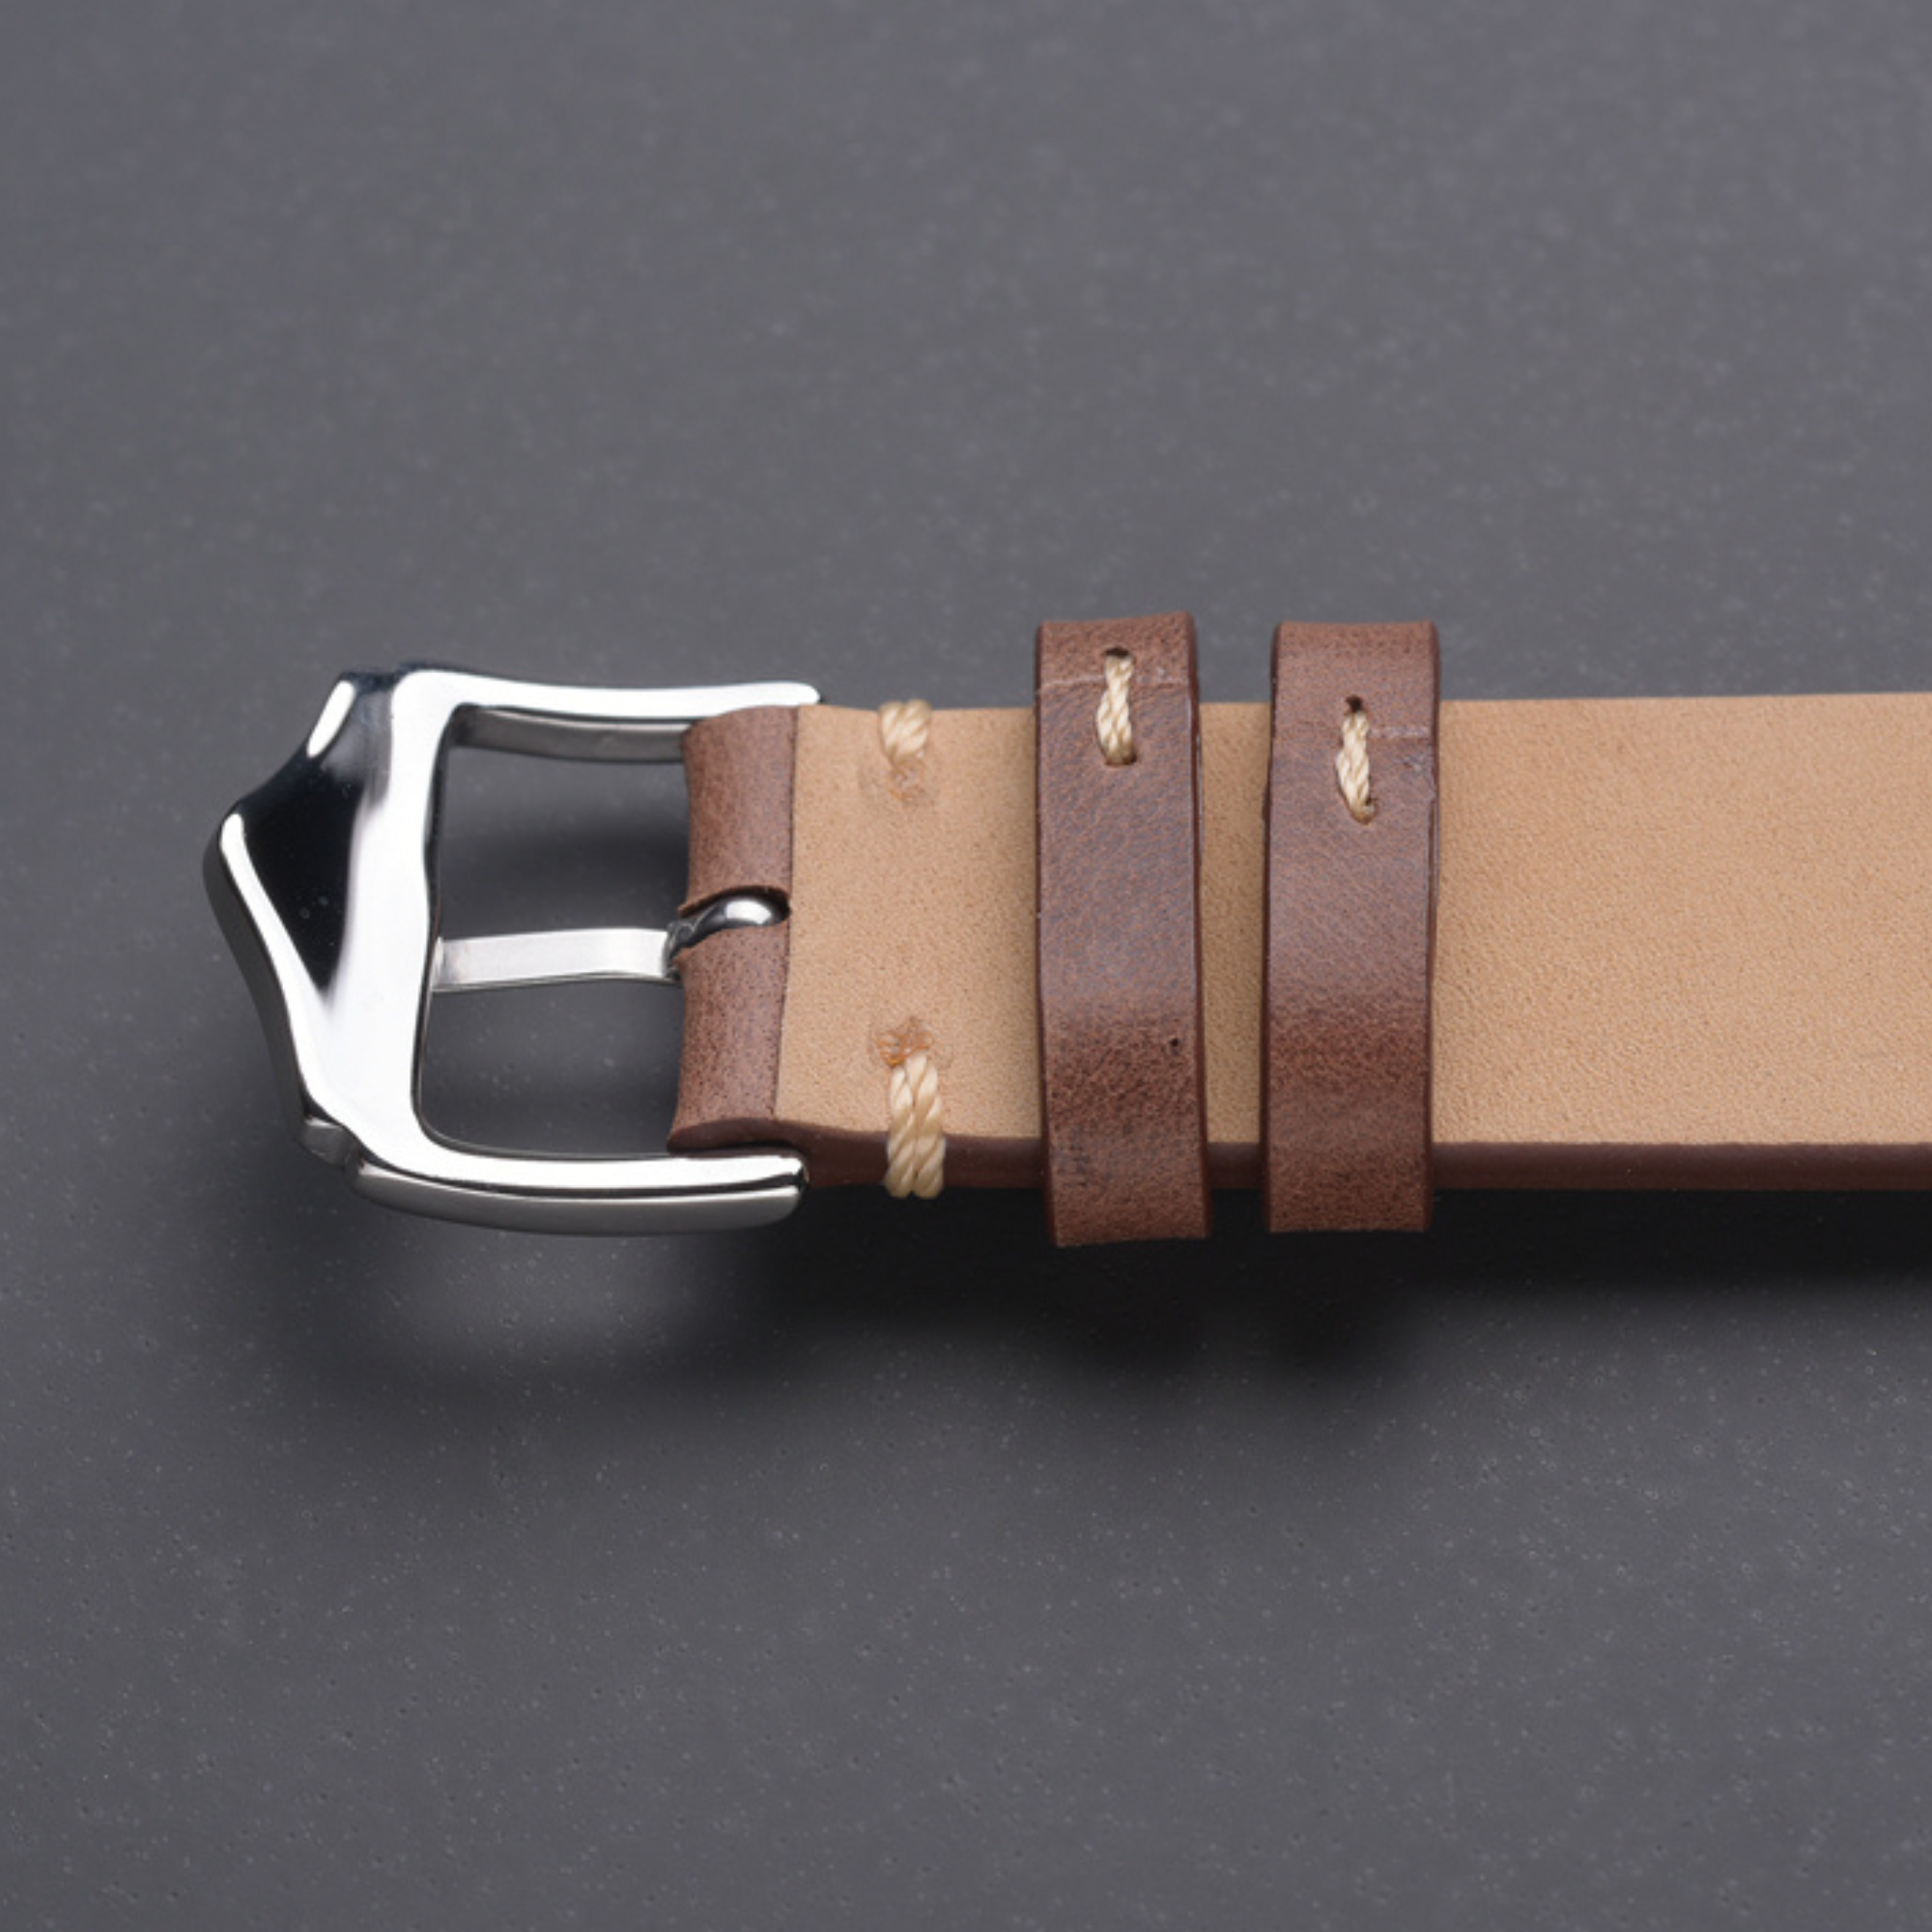 Genuine Leather Watch Strap Watchband Accessories 20mm - Oil Dark Brown watch leather strap band india online dream watches